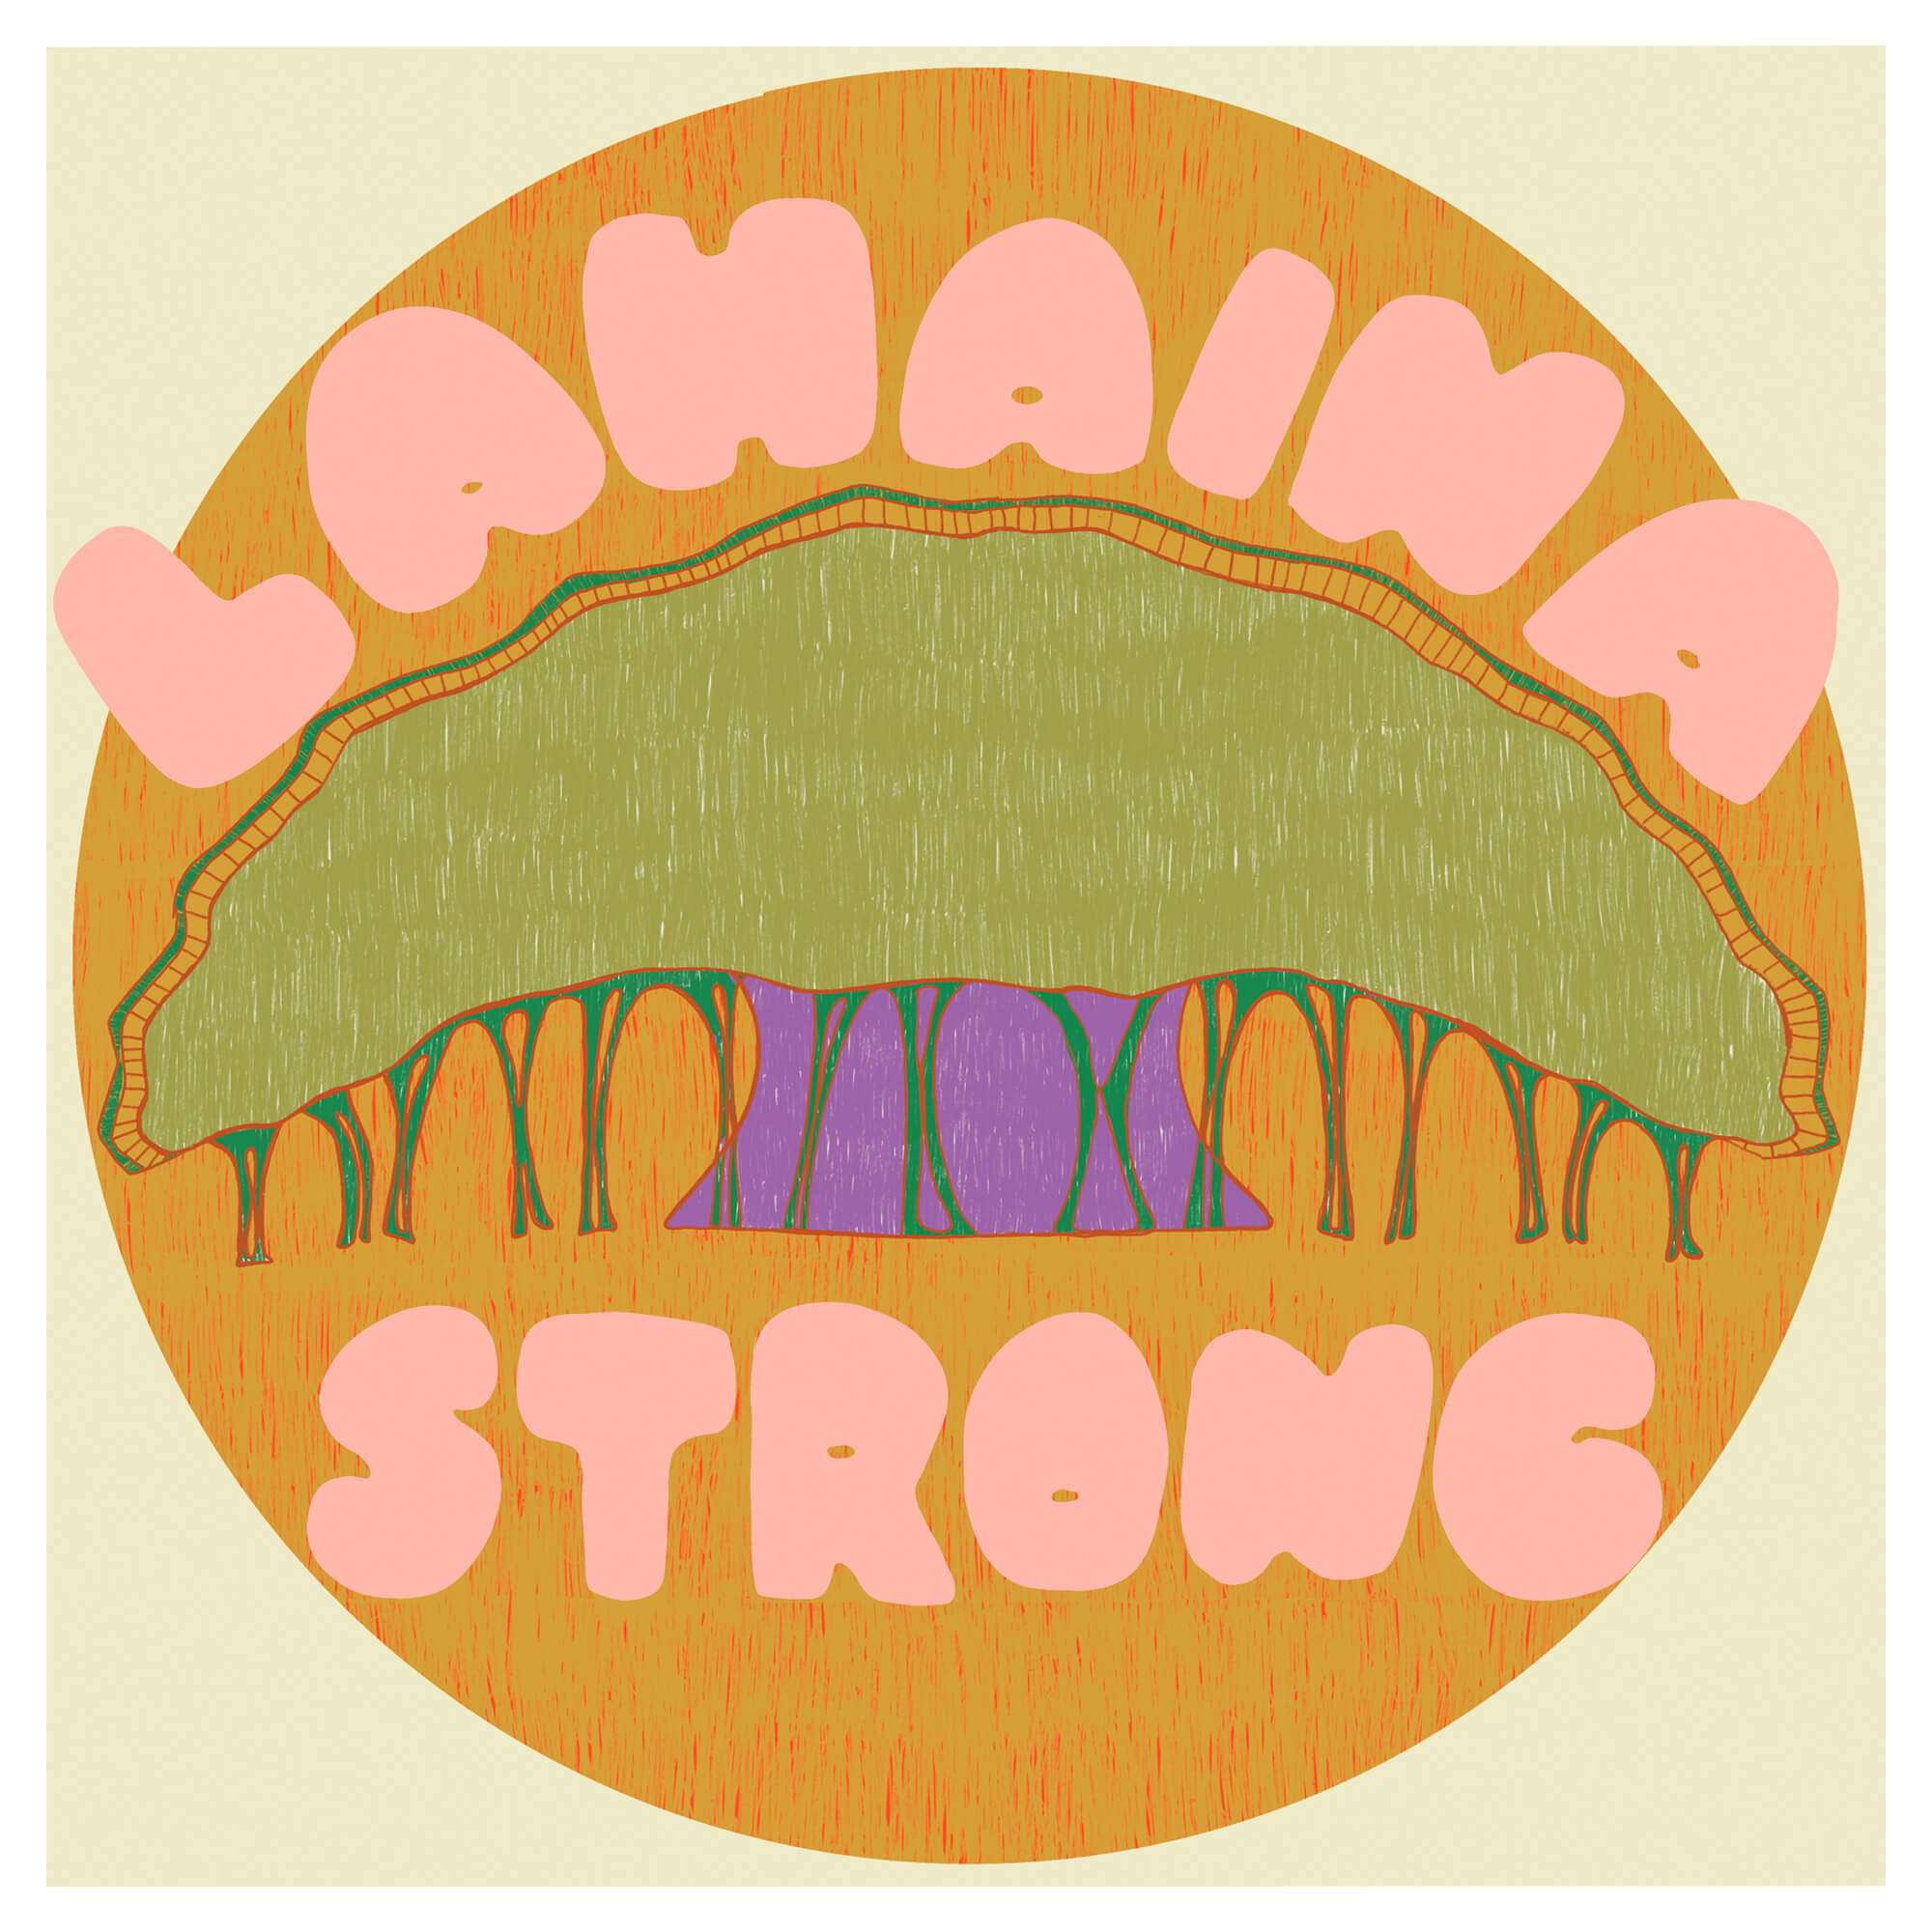 Lahaina Strong